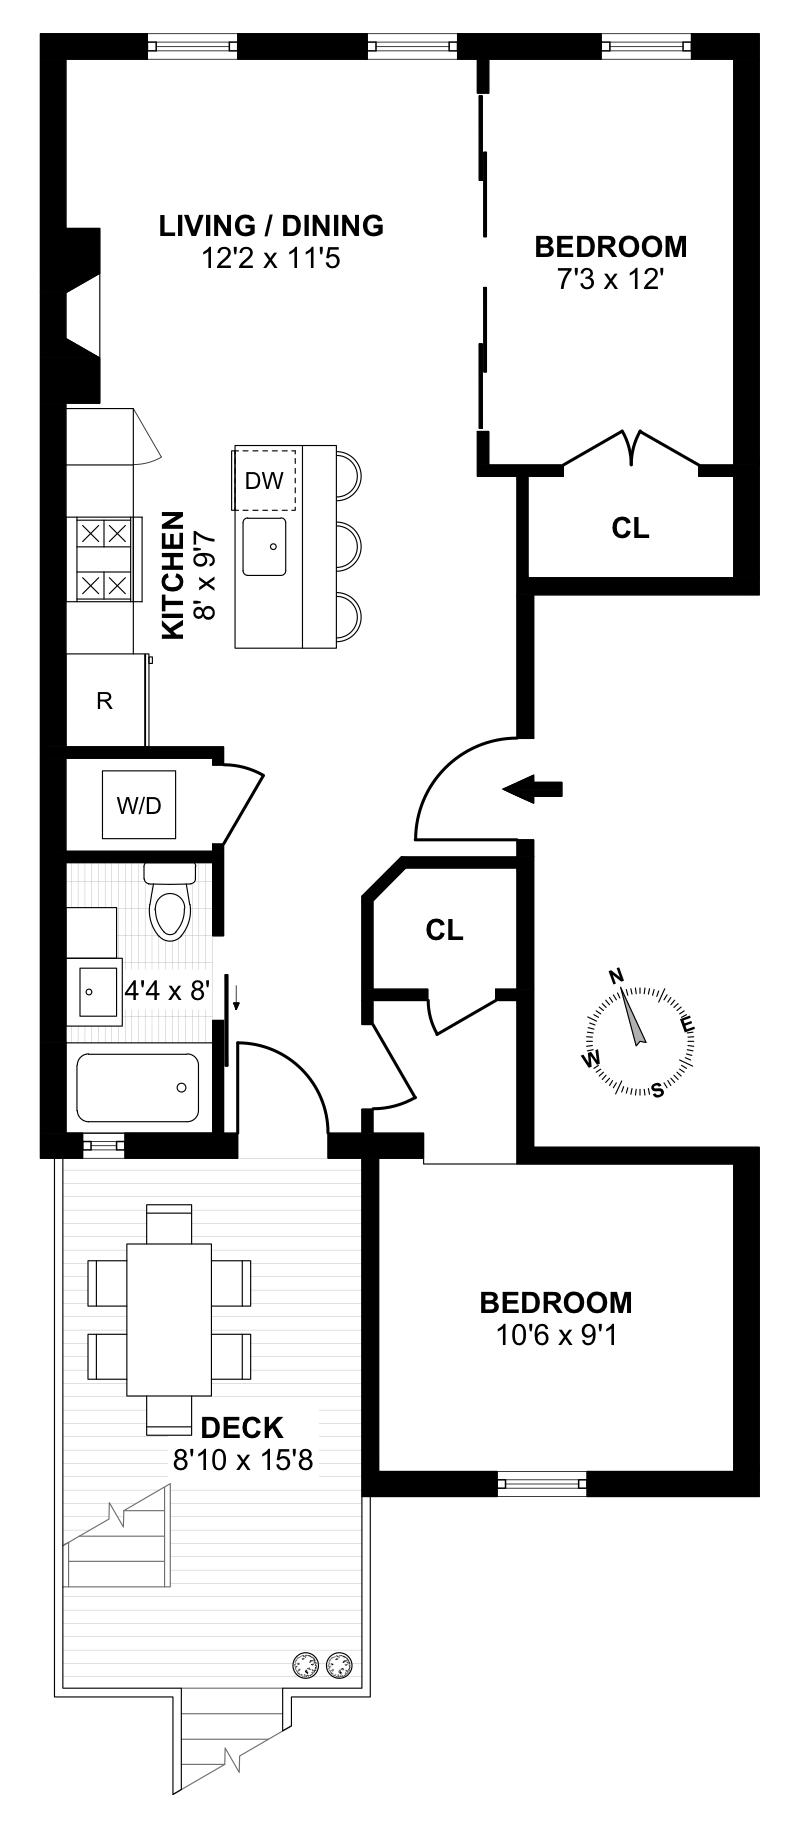 Floorplan for 291 4th St, 2